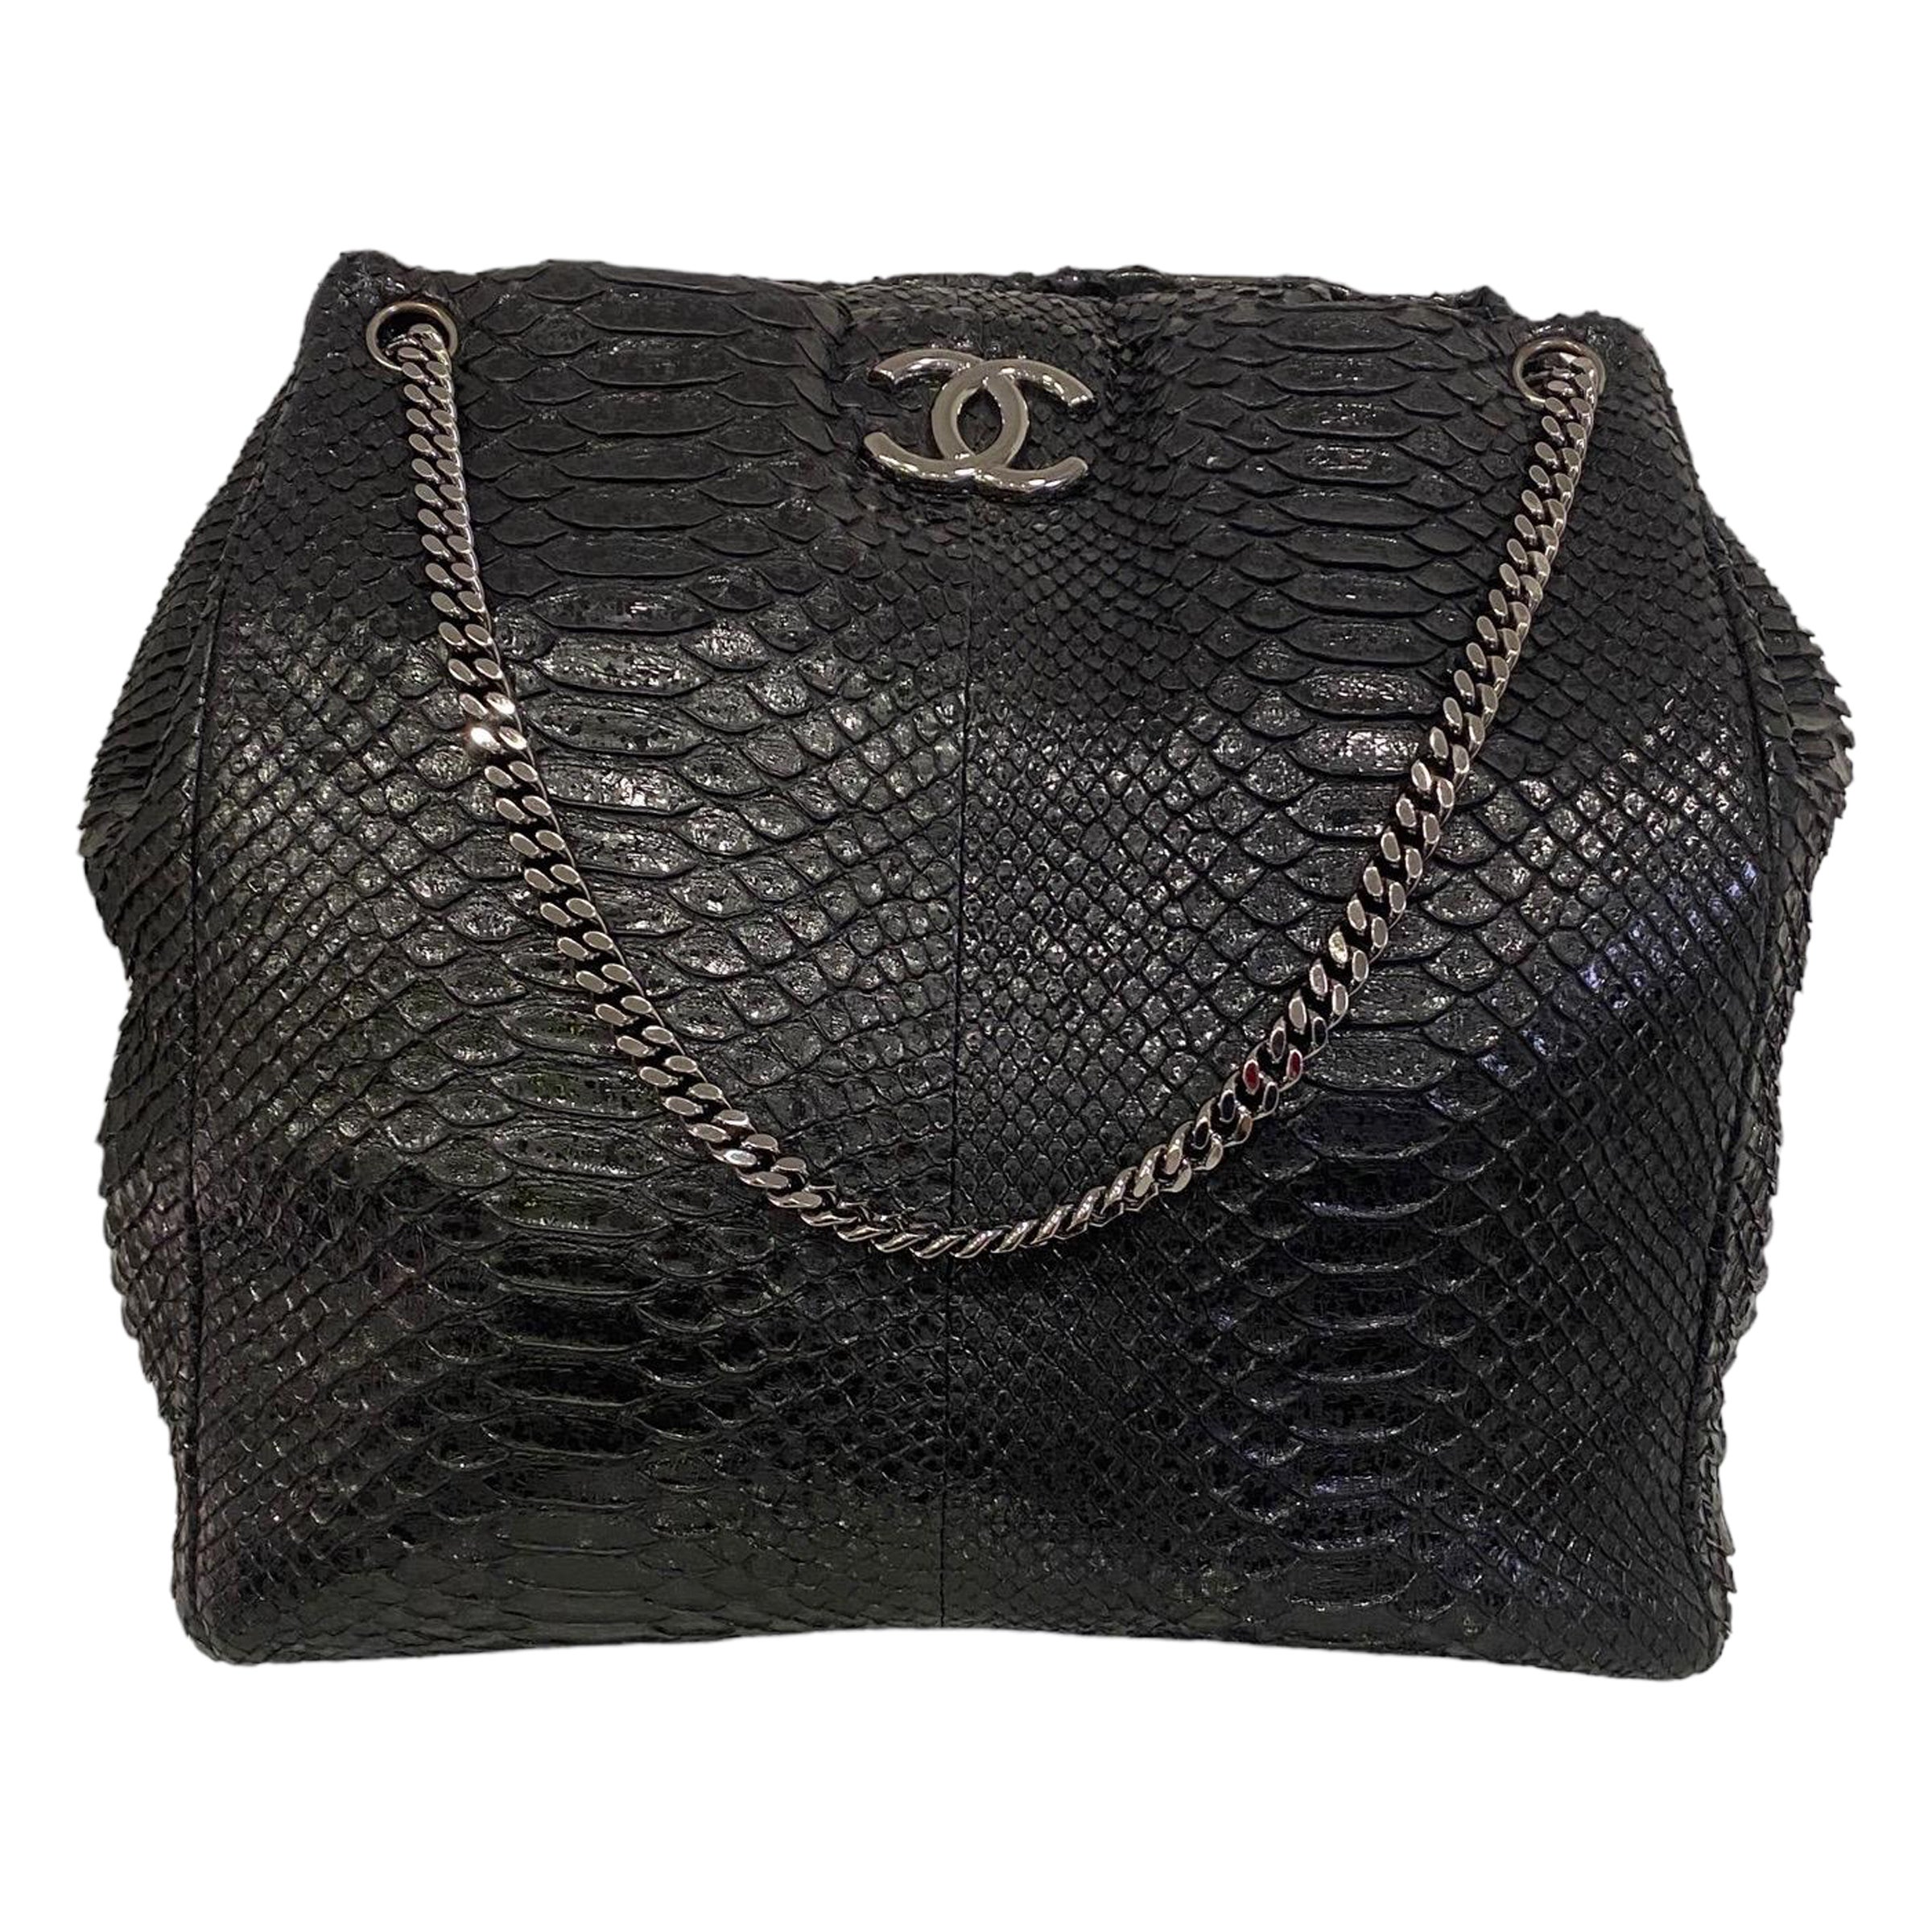 2009 Chanel Tote Black Piton Hobo Bag For Sale